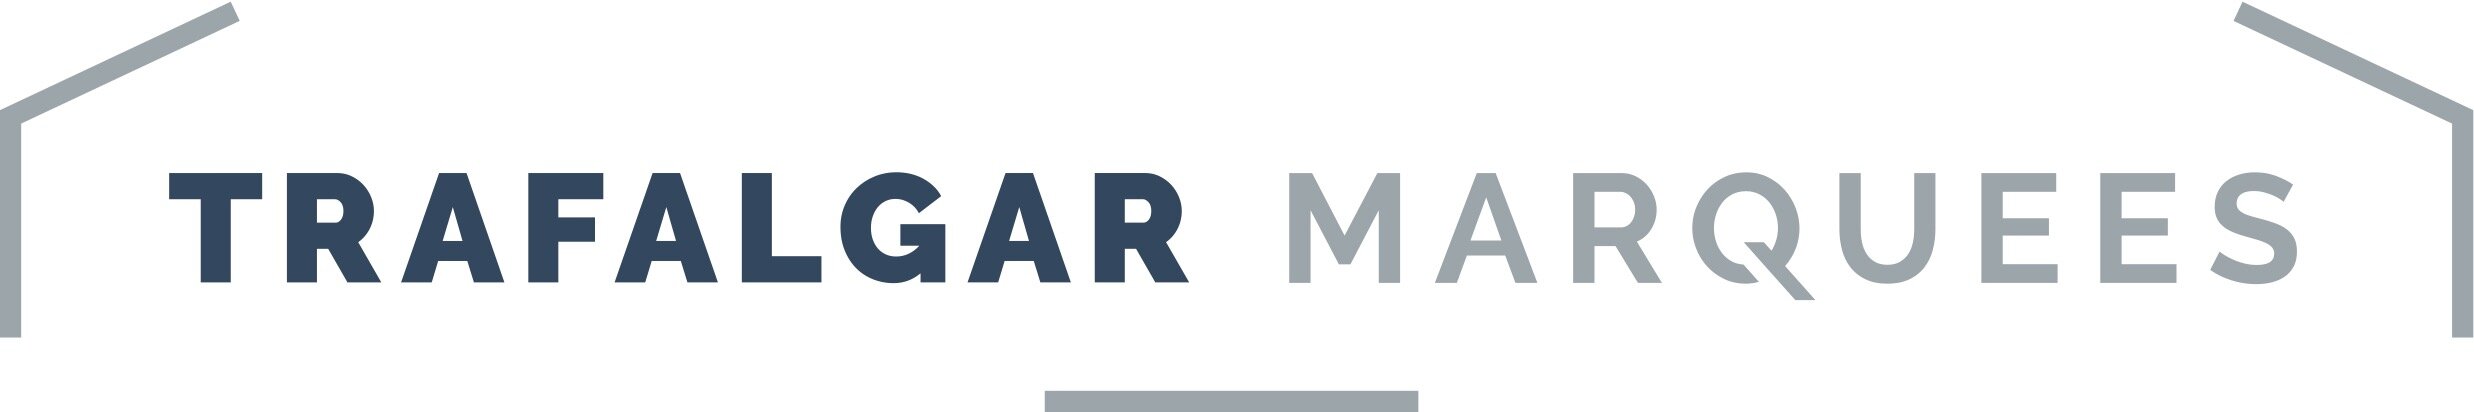 Trafalgar Marquees Primary Logo Full Colour (1) (1).jpg